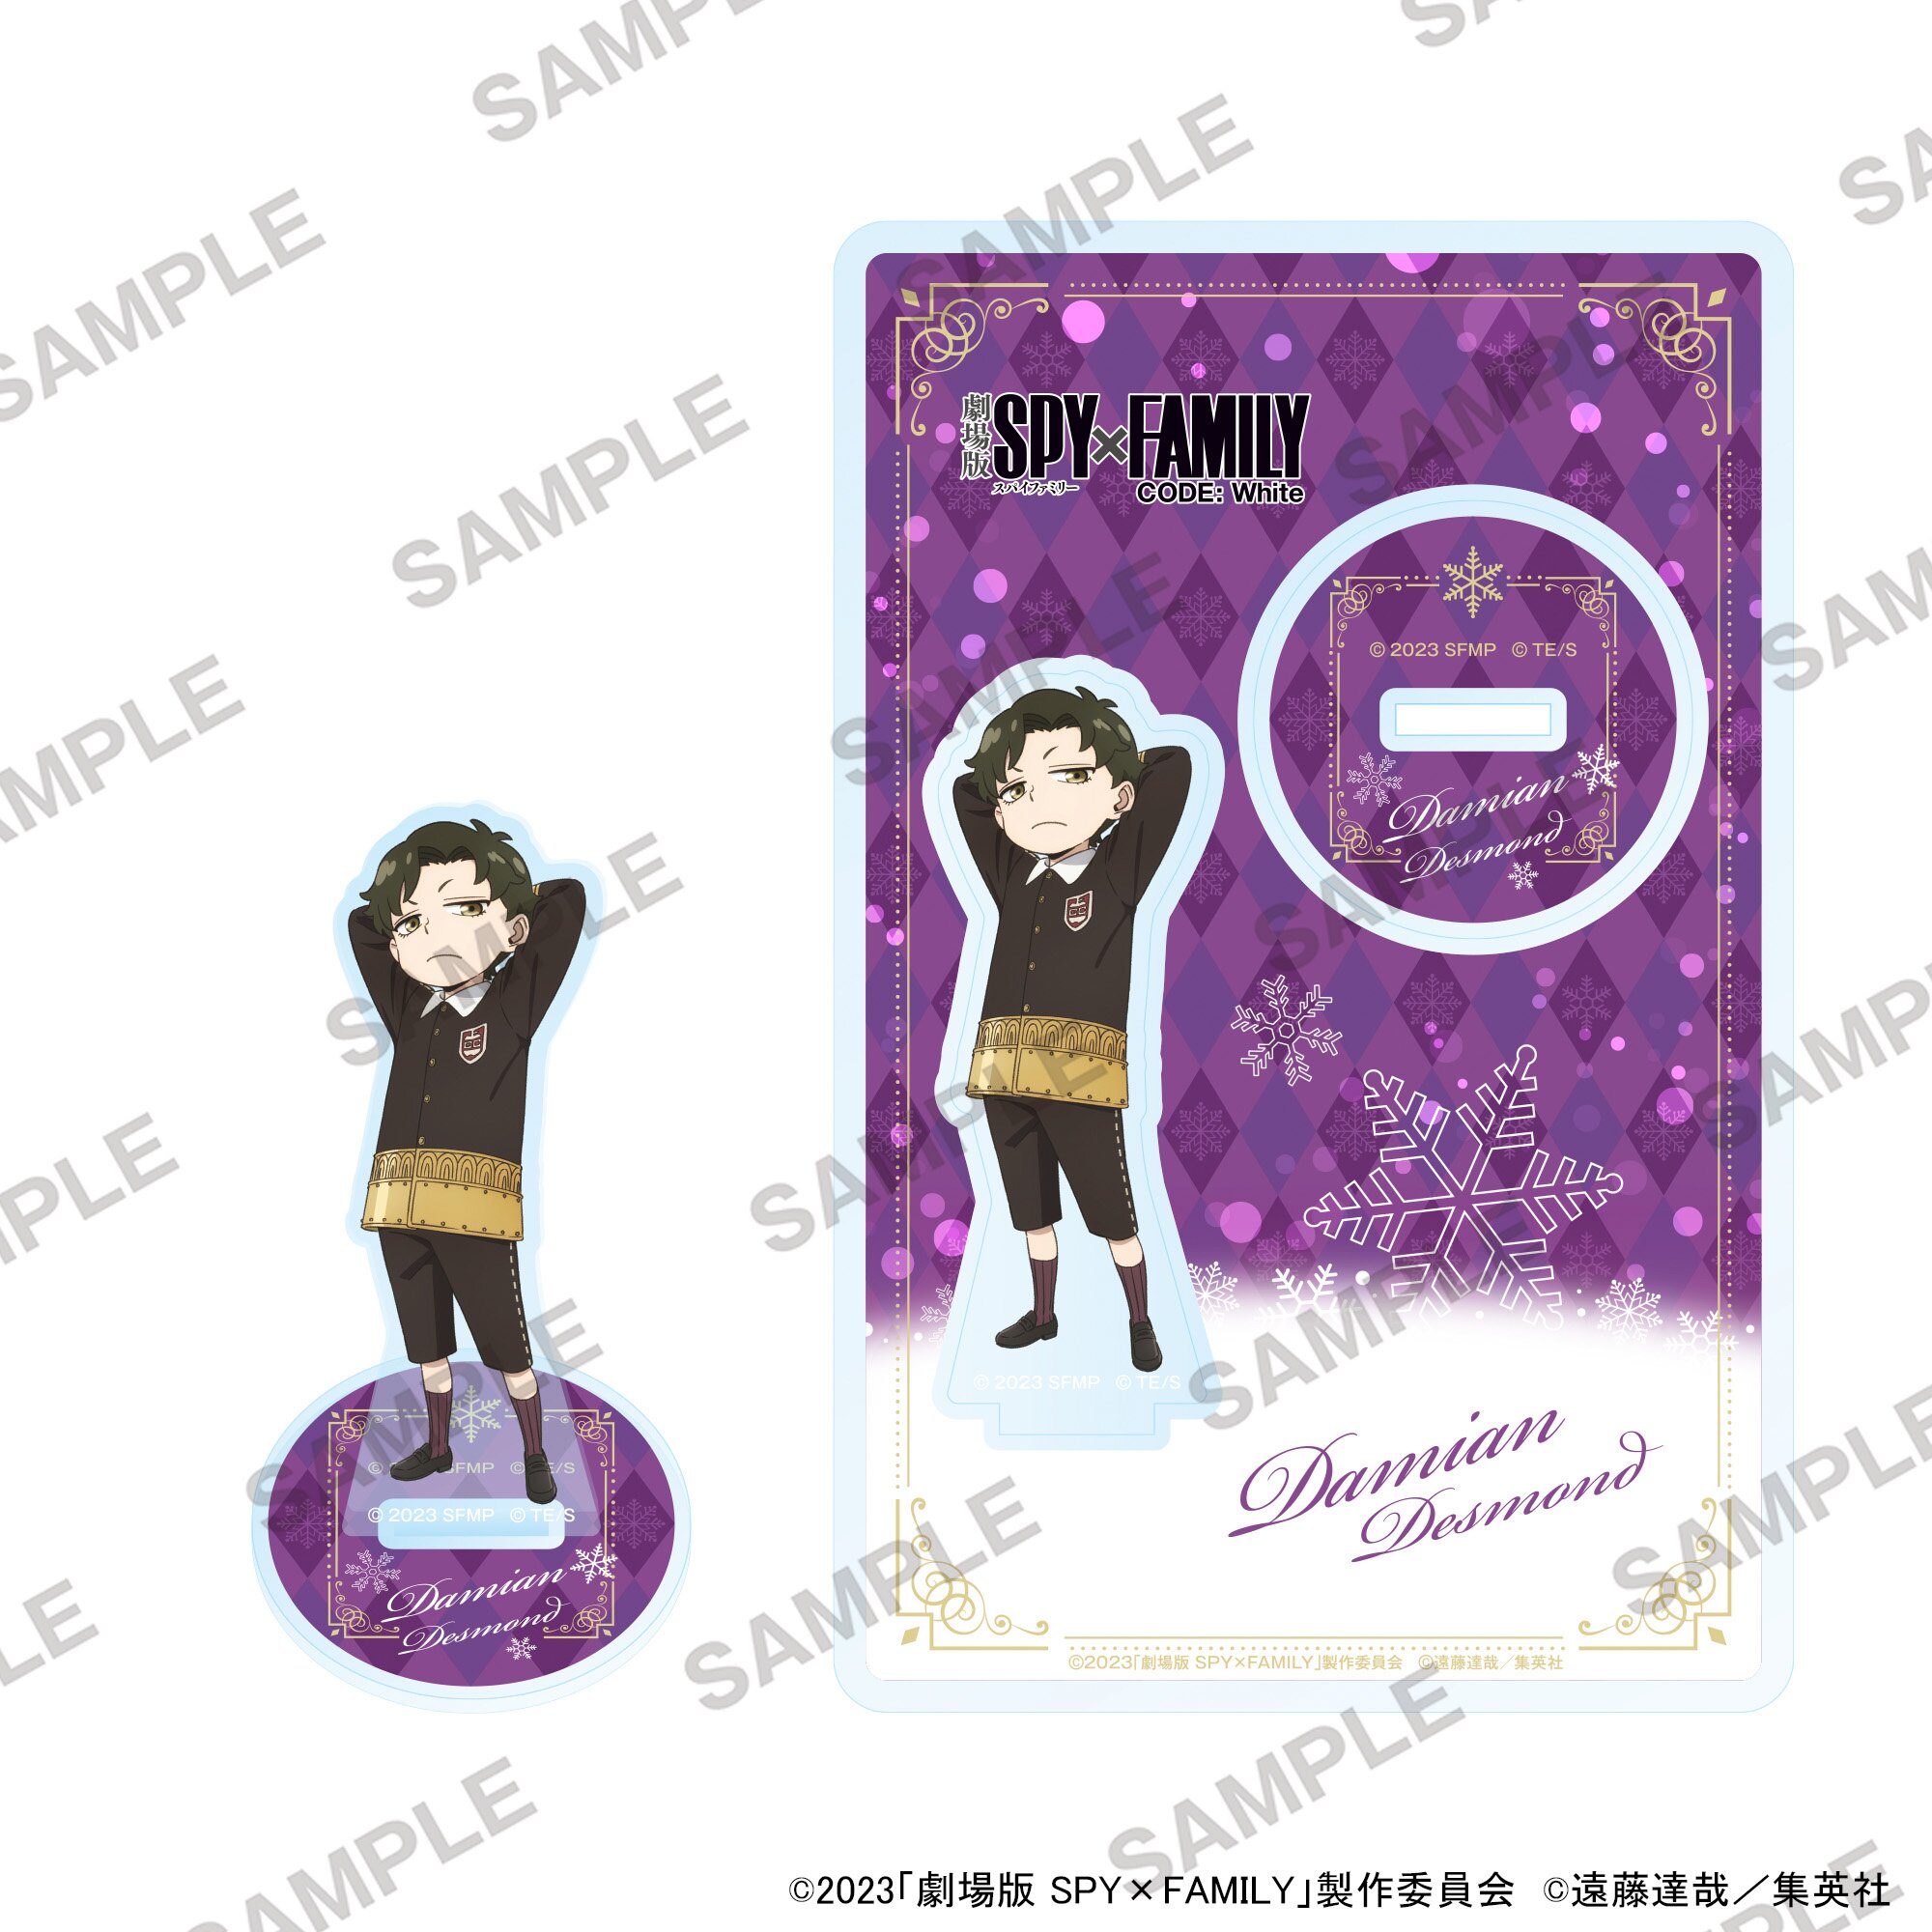  Spy x Family Merch Family Portrait ID Badge Holder Keychain  Breakaway Lanyard w/Acrylic Charm : Office Products